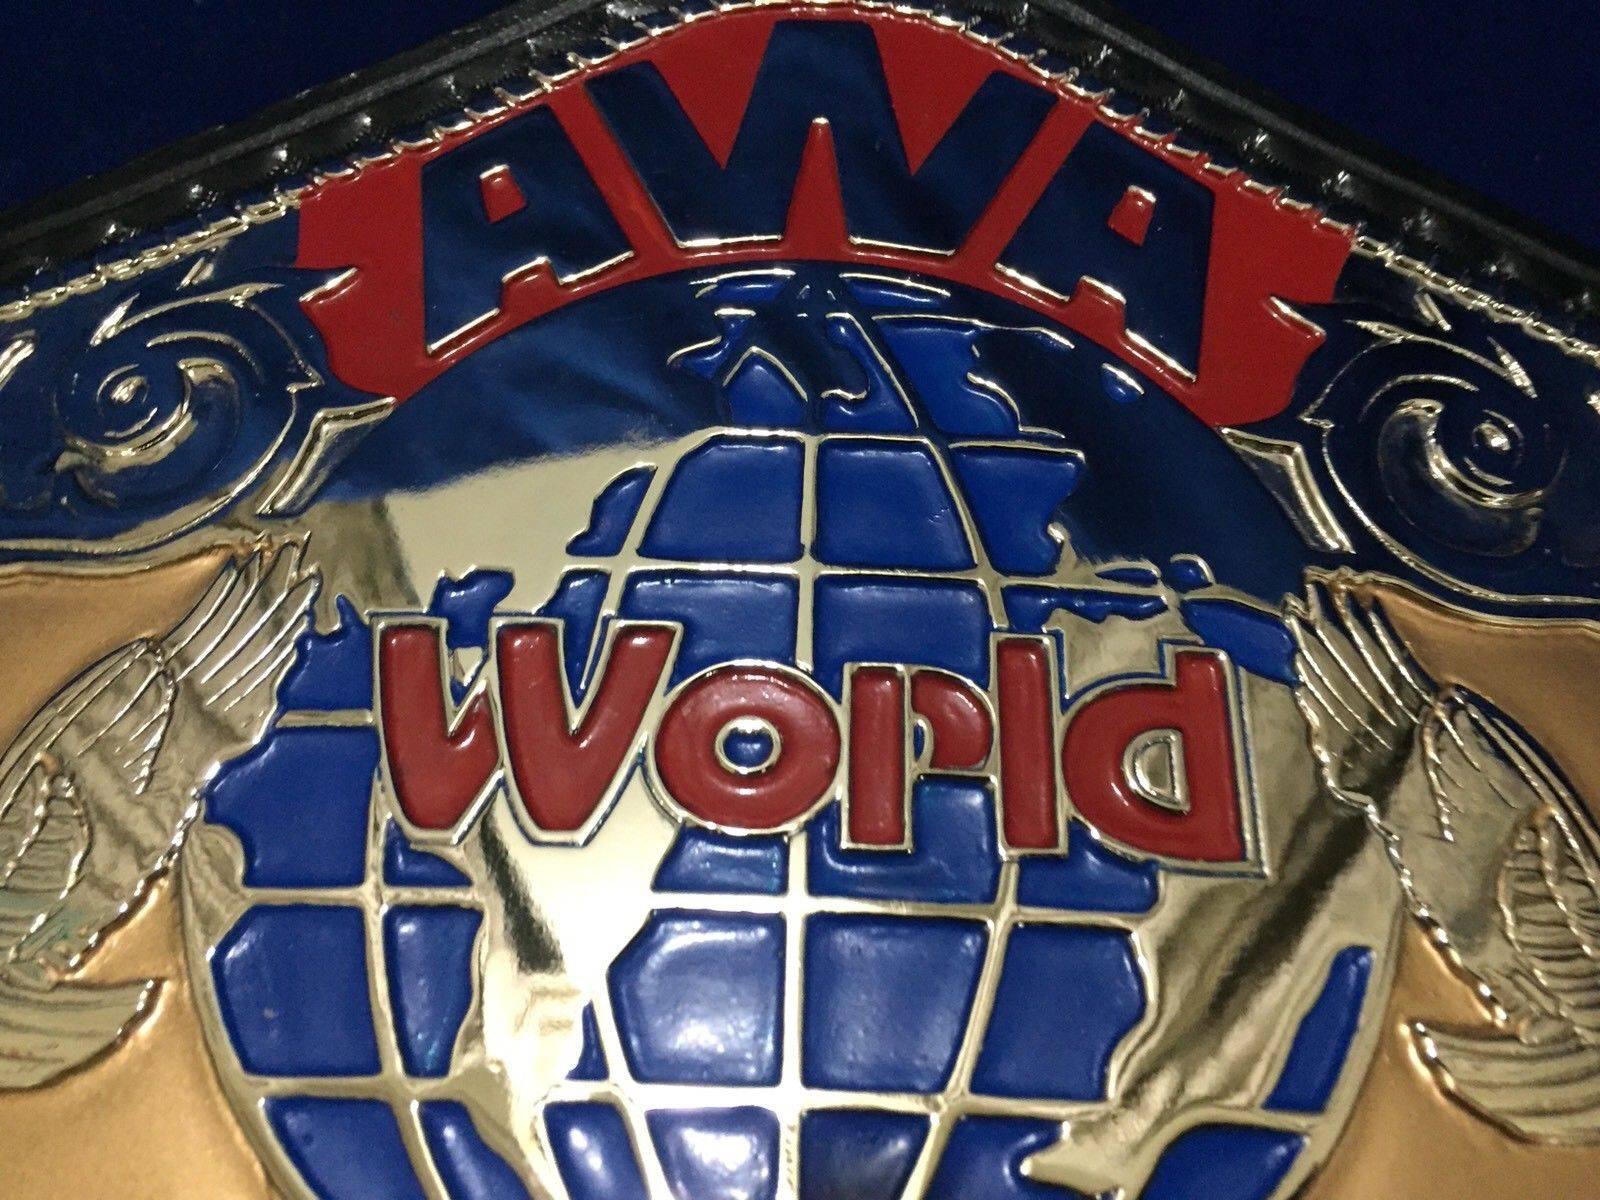 AWA WORLD TAG TEAM 24K GOLD Championship Belt - Zees Belts